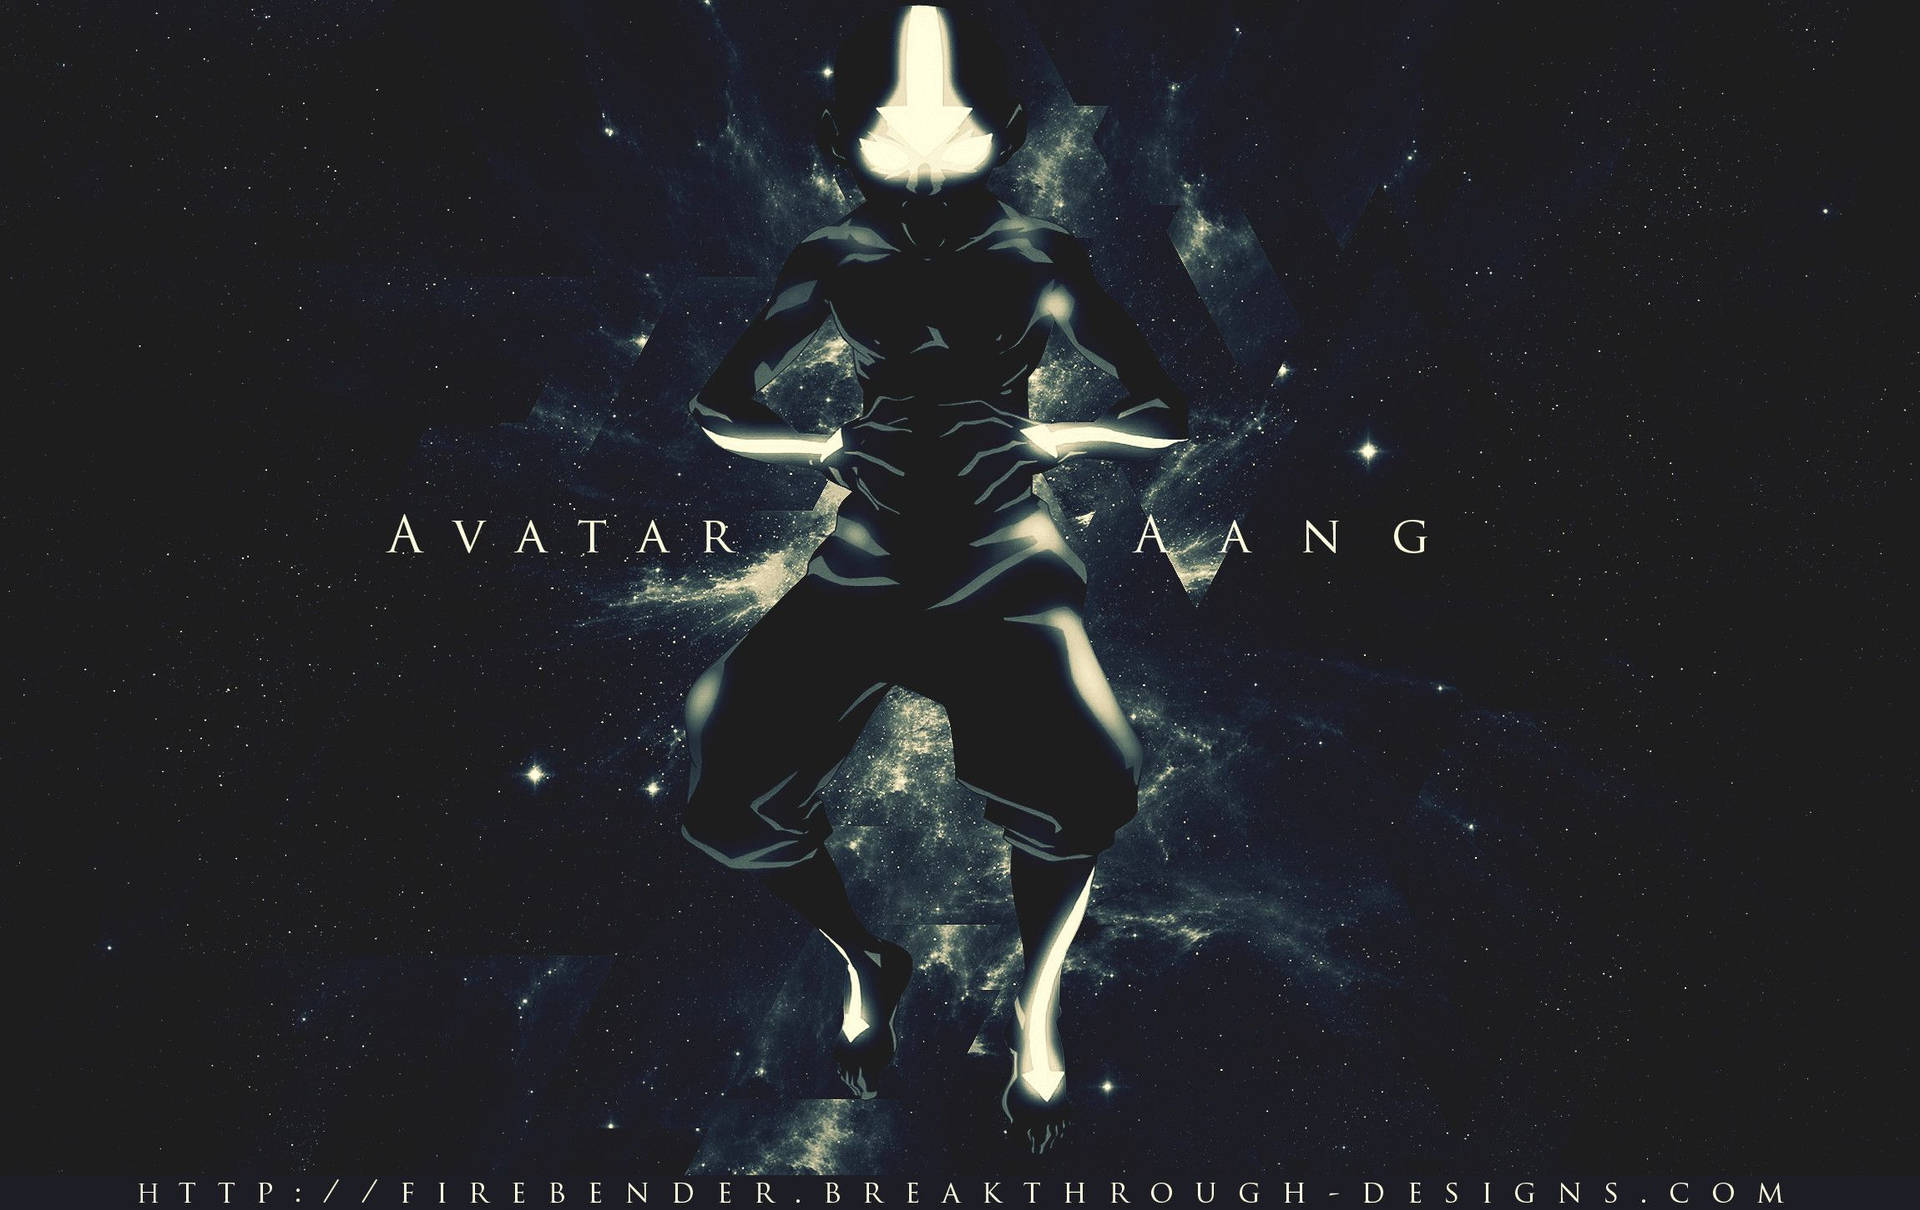 Free Avatar The Last Airbender Wallpaper Downloads, [100+] Avatar The Last  Airbender Wallpapers for FREE 